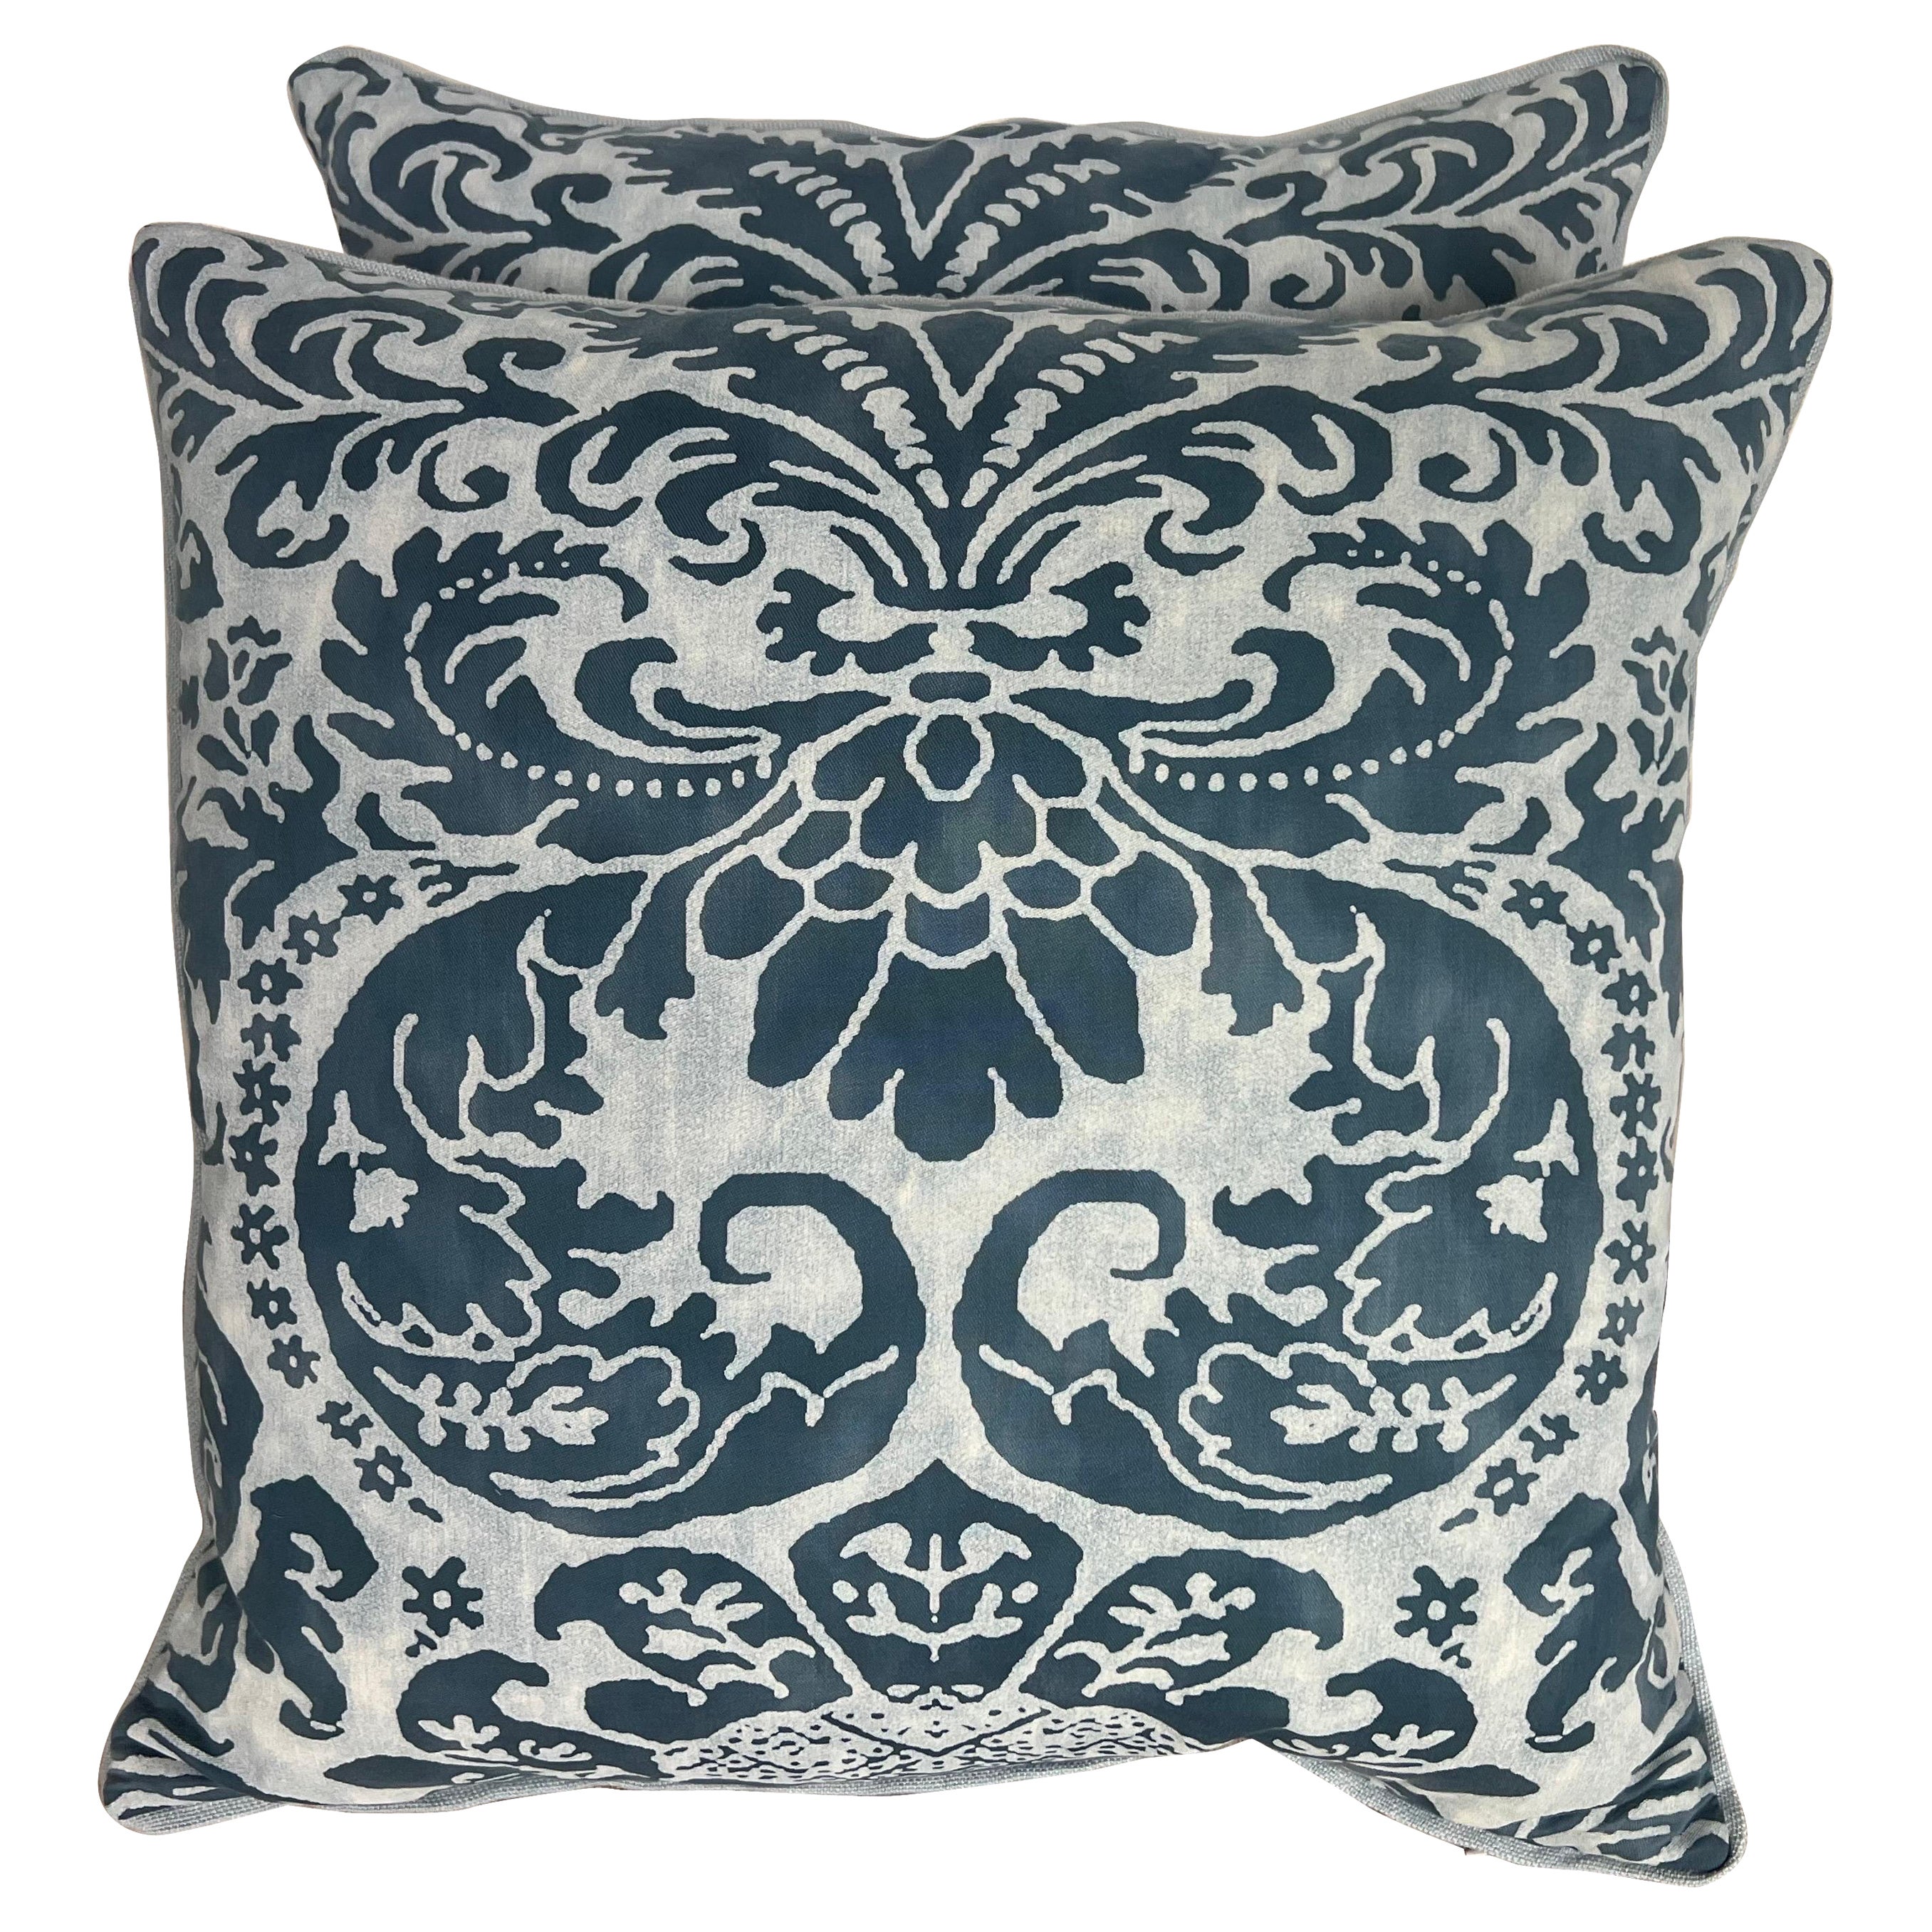 Pair of Custom Blue & White Fortuny Pillows